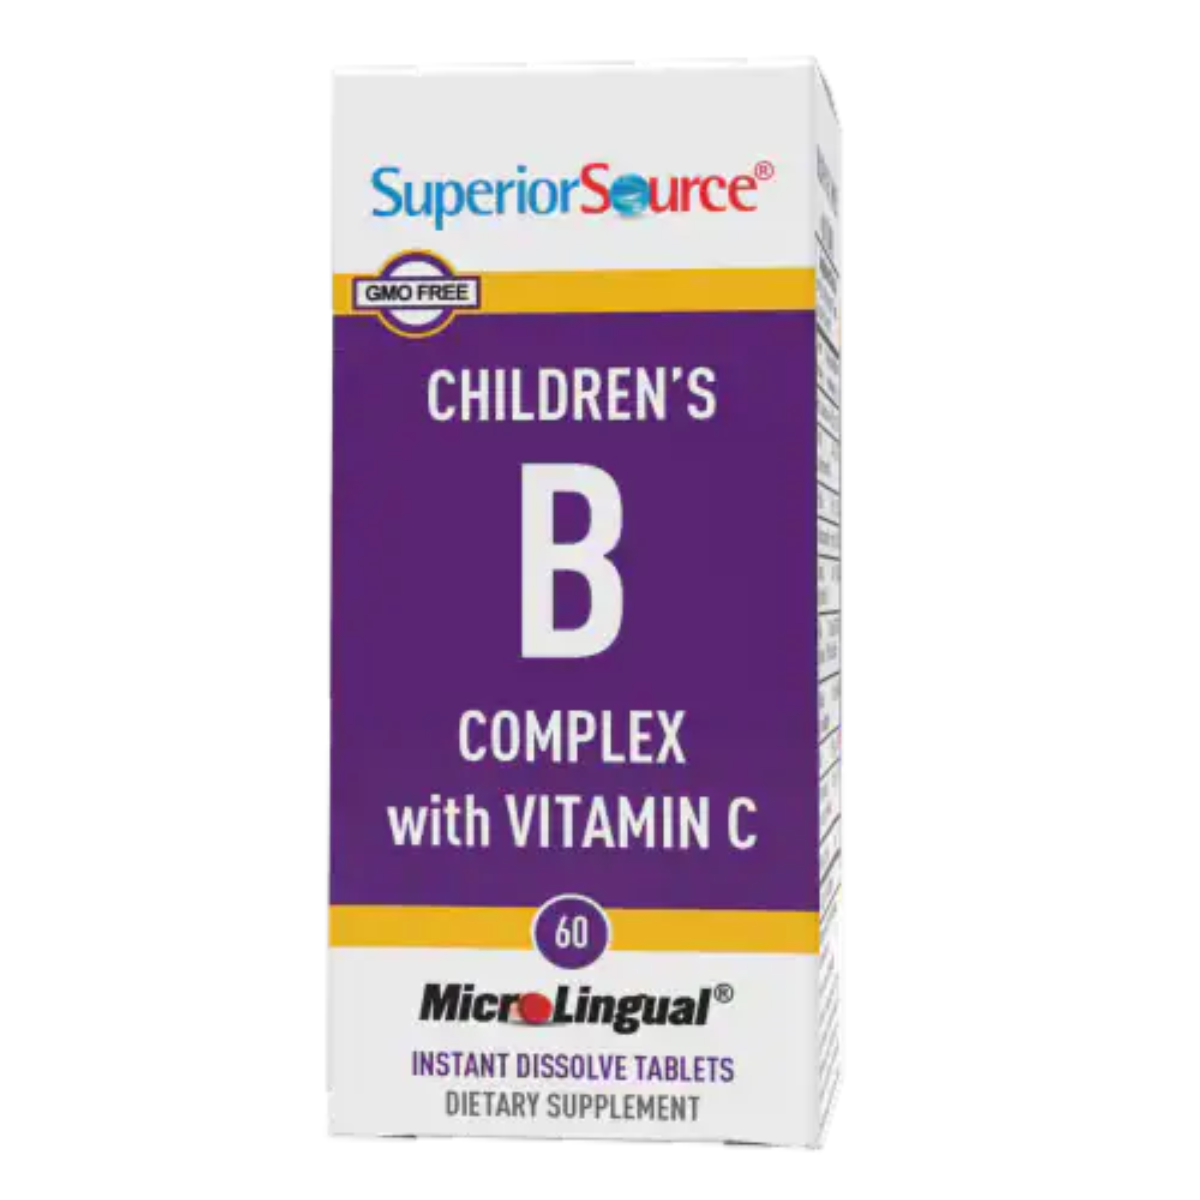 Children’s B Complex with Vitamin C